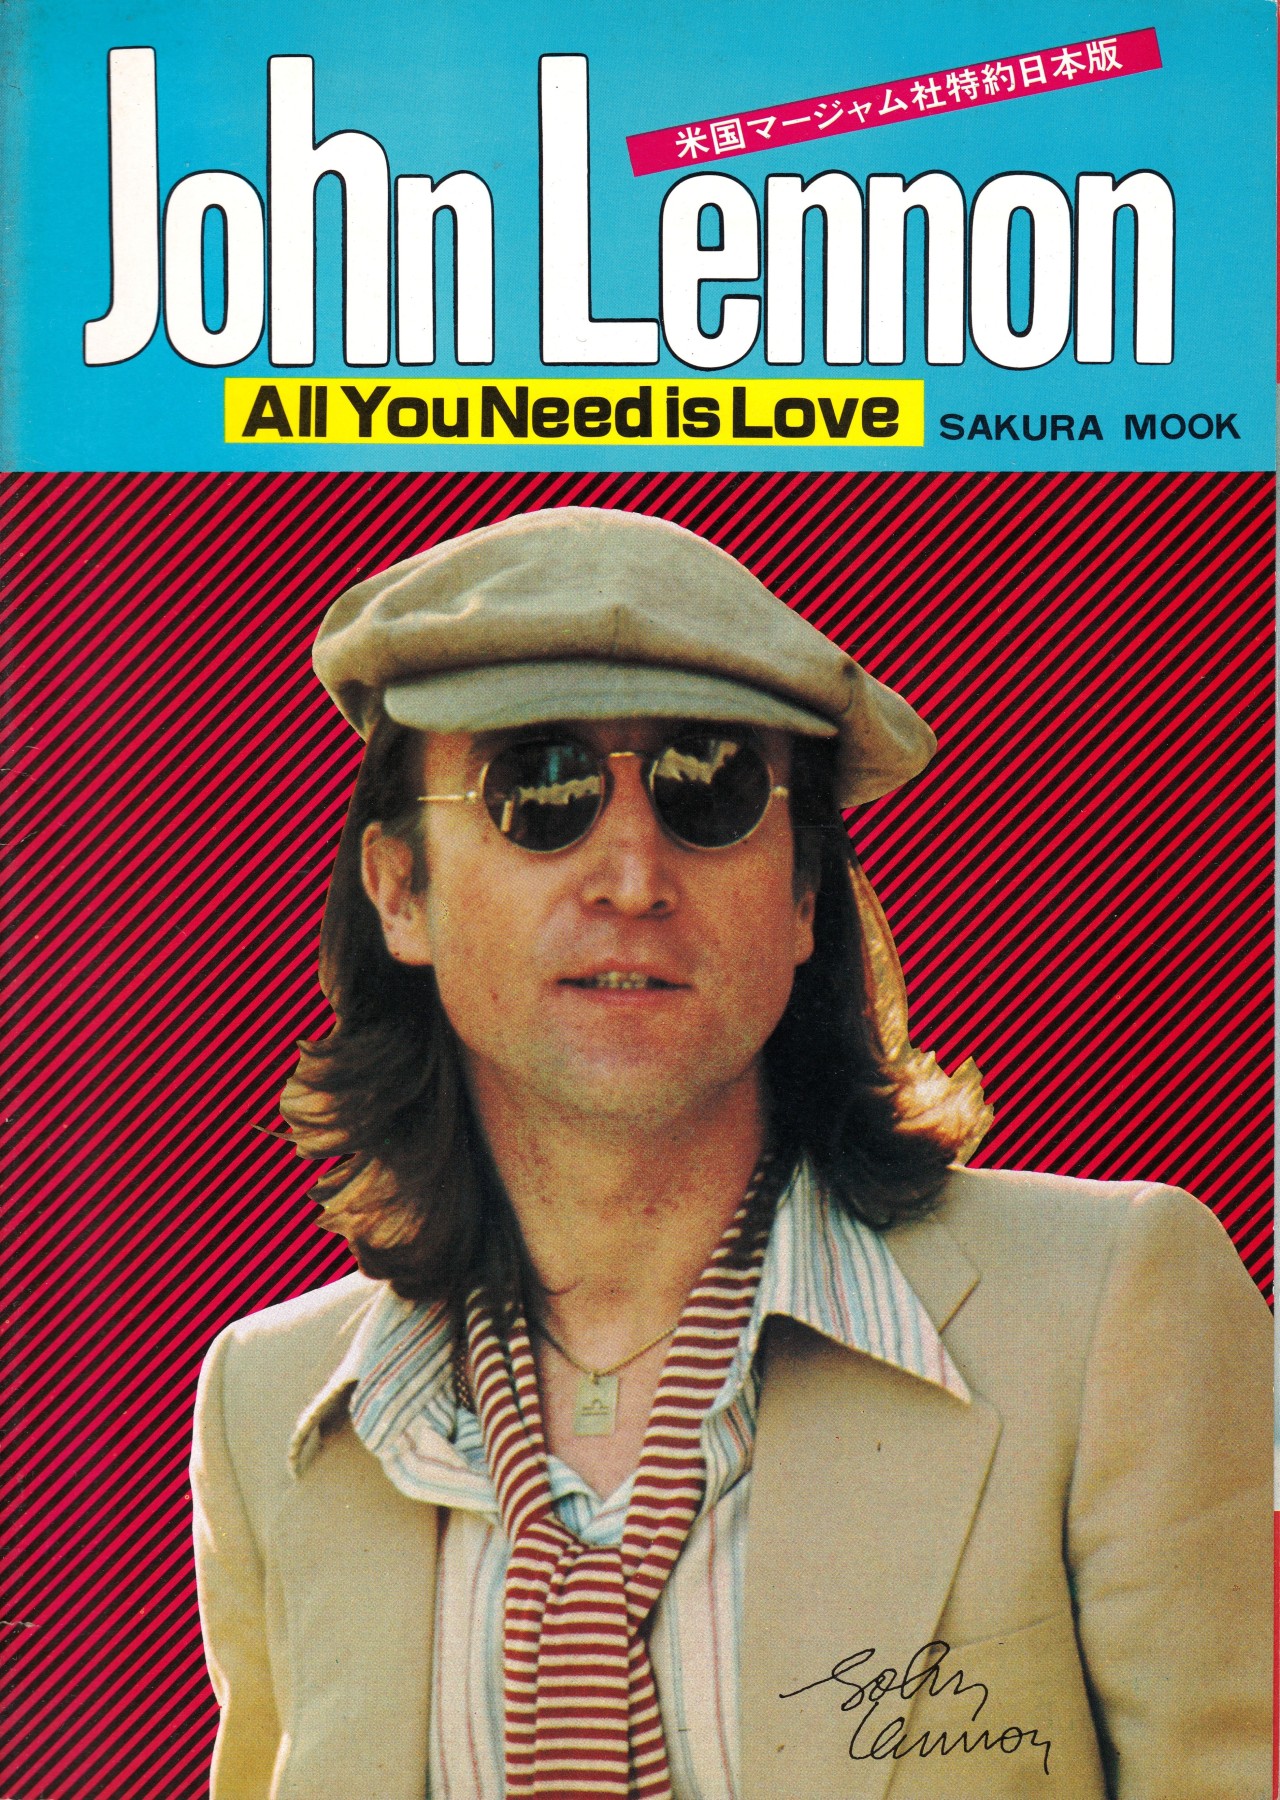 John Lennon　All You Need is Love
SAKURA MOOK 6
笠倉出版社
米国マージャム社特約日本版 #John Lennon　All You Need is Love #john lennon#ジョン・レノン#sakura mook#anamon#古本屋あなもん#あなもん#book cover